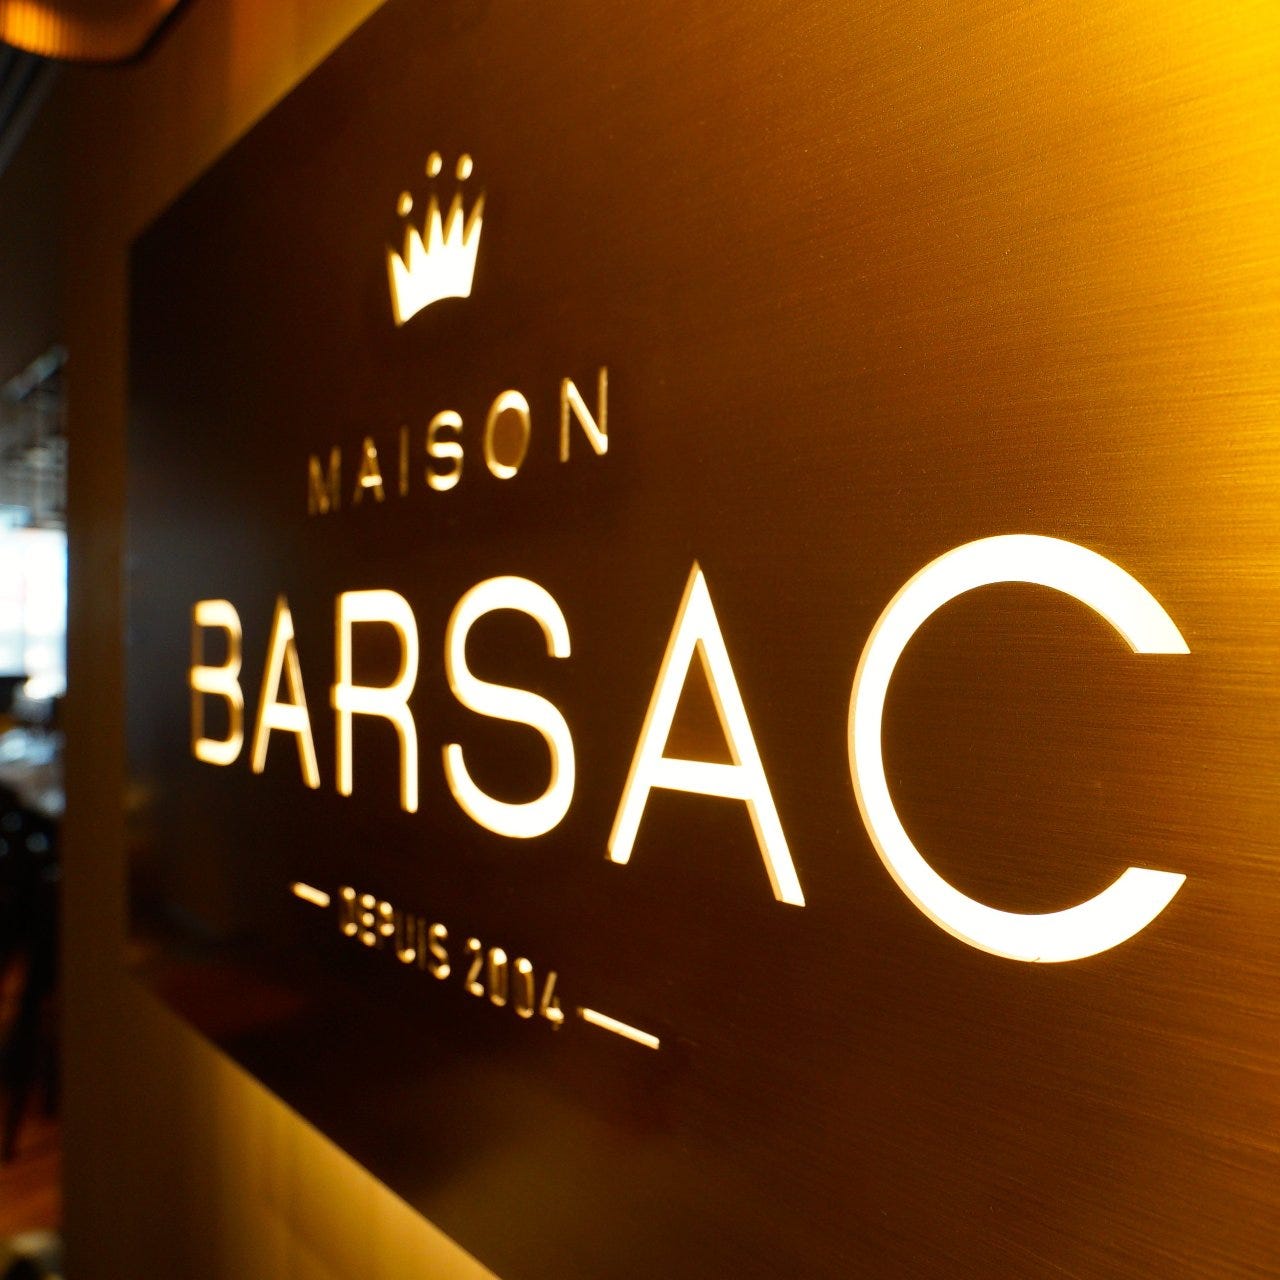 MAISON BARSAC